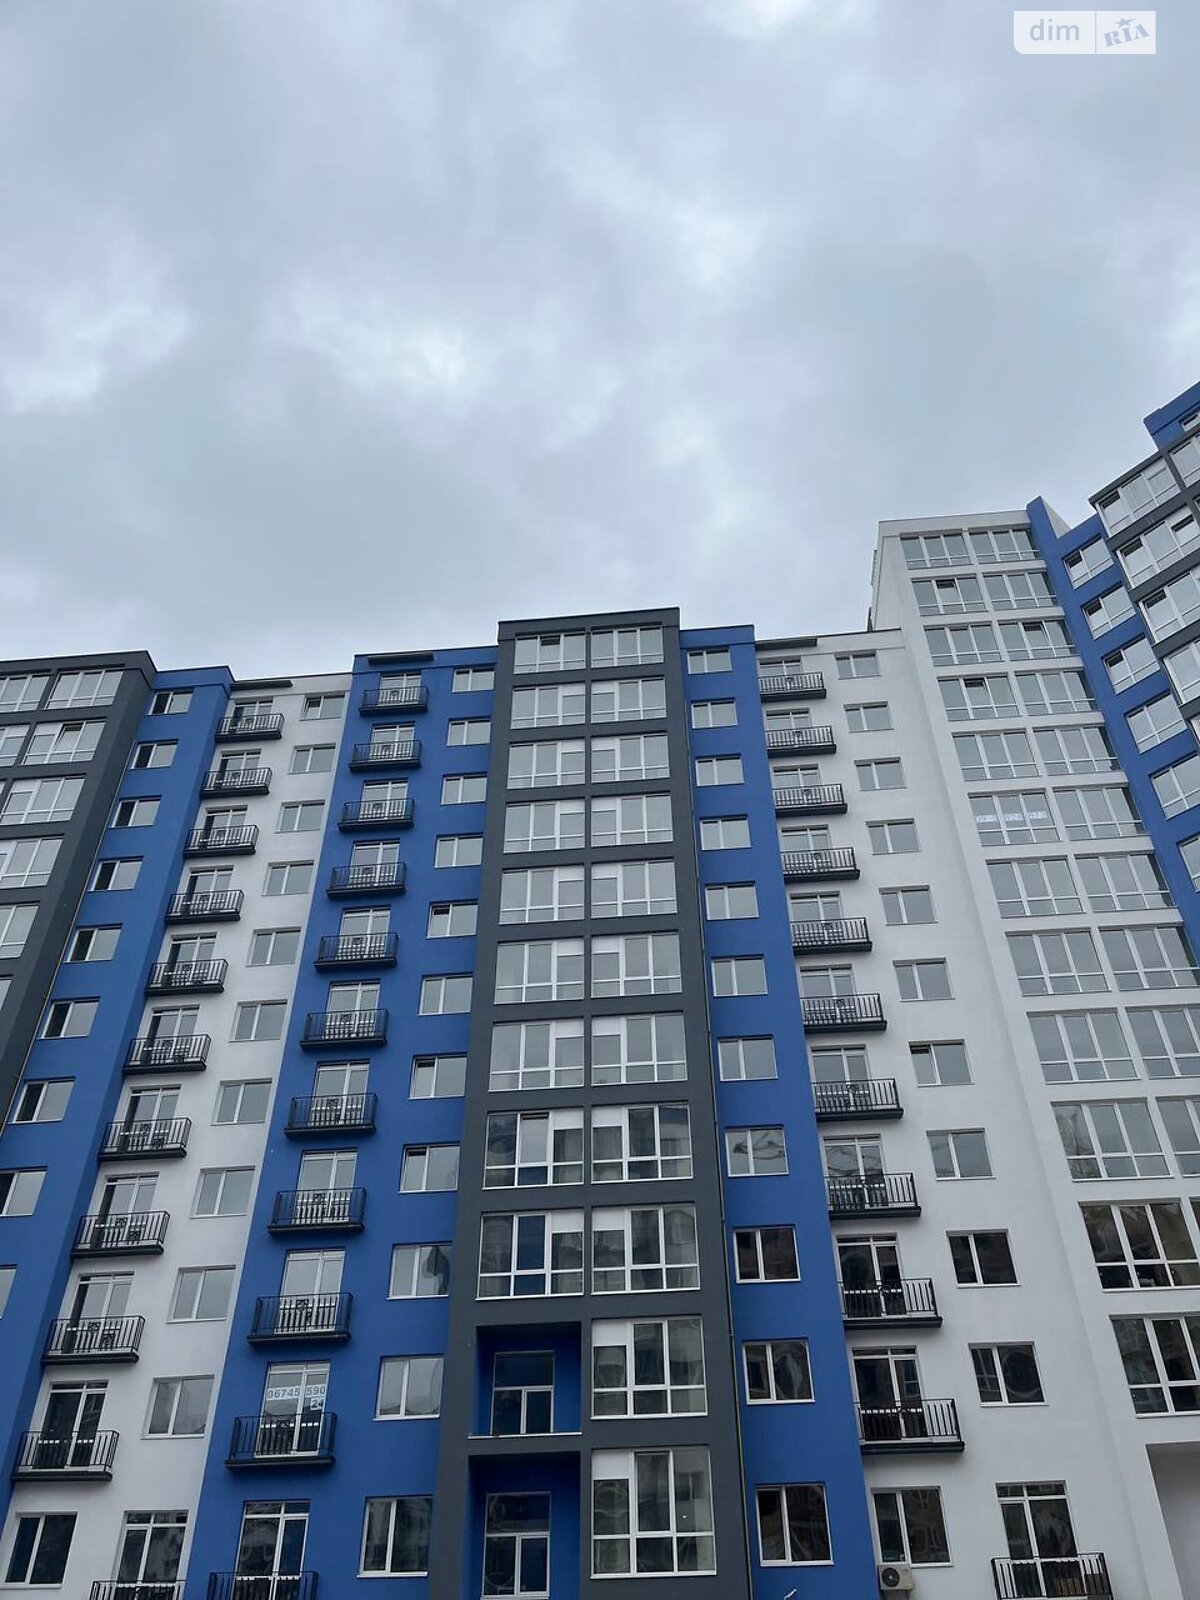 Продажа однокомнатной квартиры в Ивано-Франковске, на ул. Княгинин, кв. 44, район Княгинин фото 1